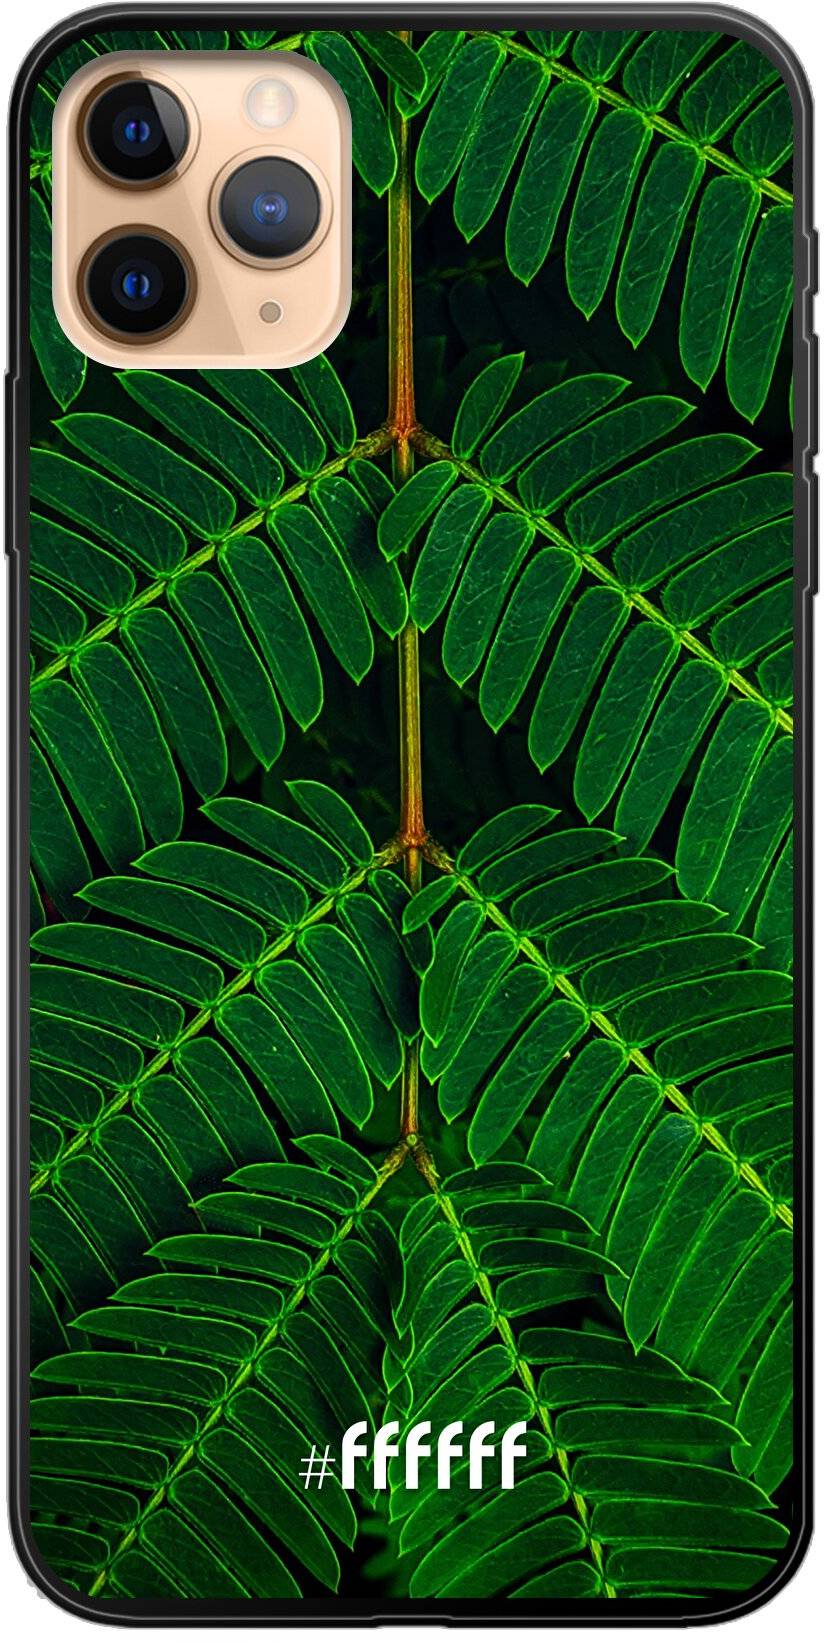 Symmetric Plants iPhone 11 Pro Max